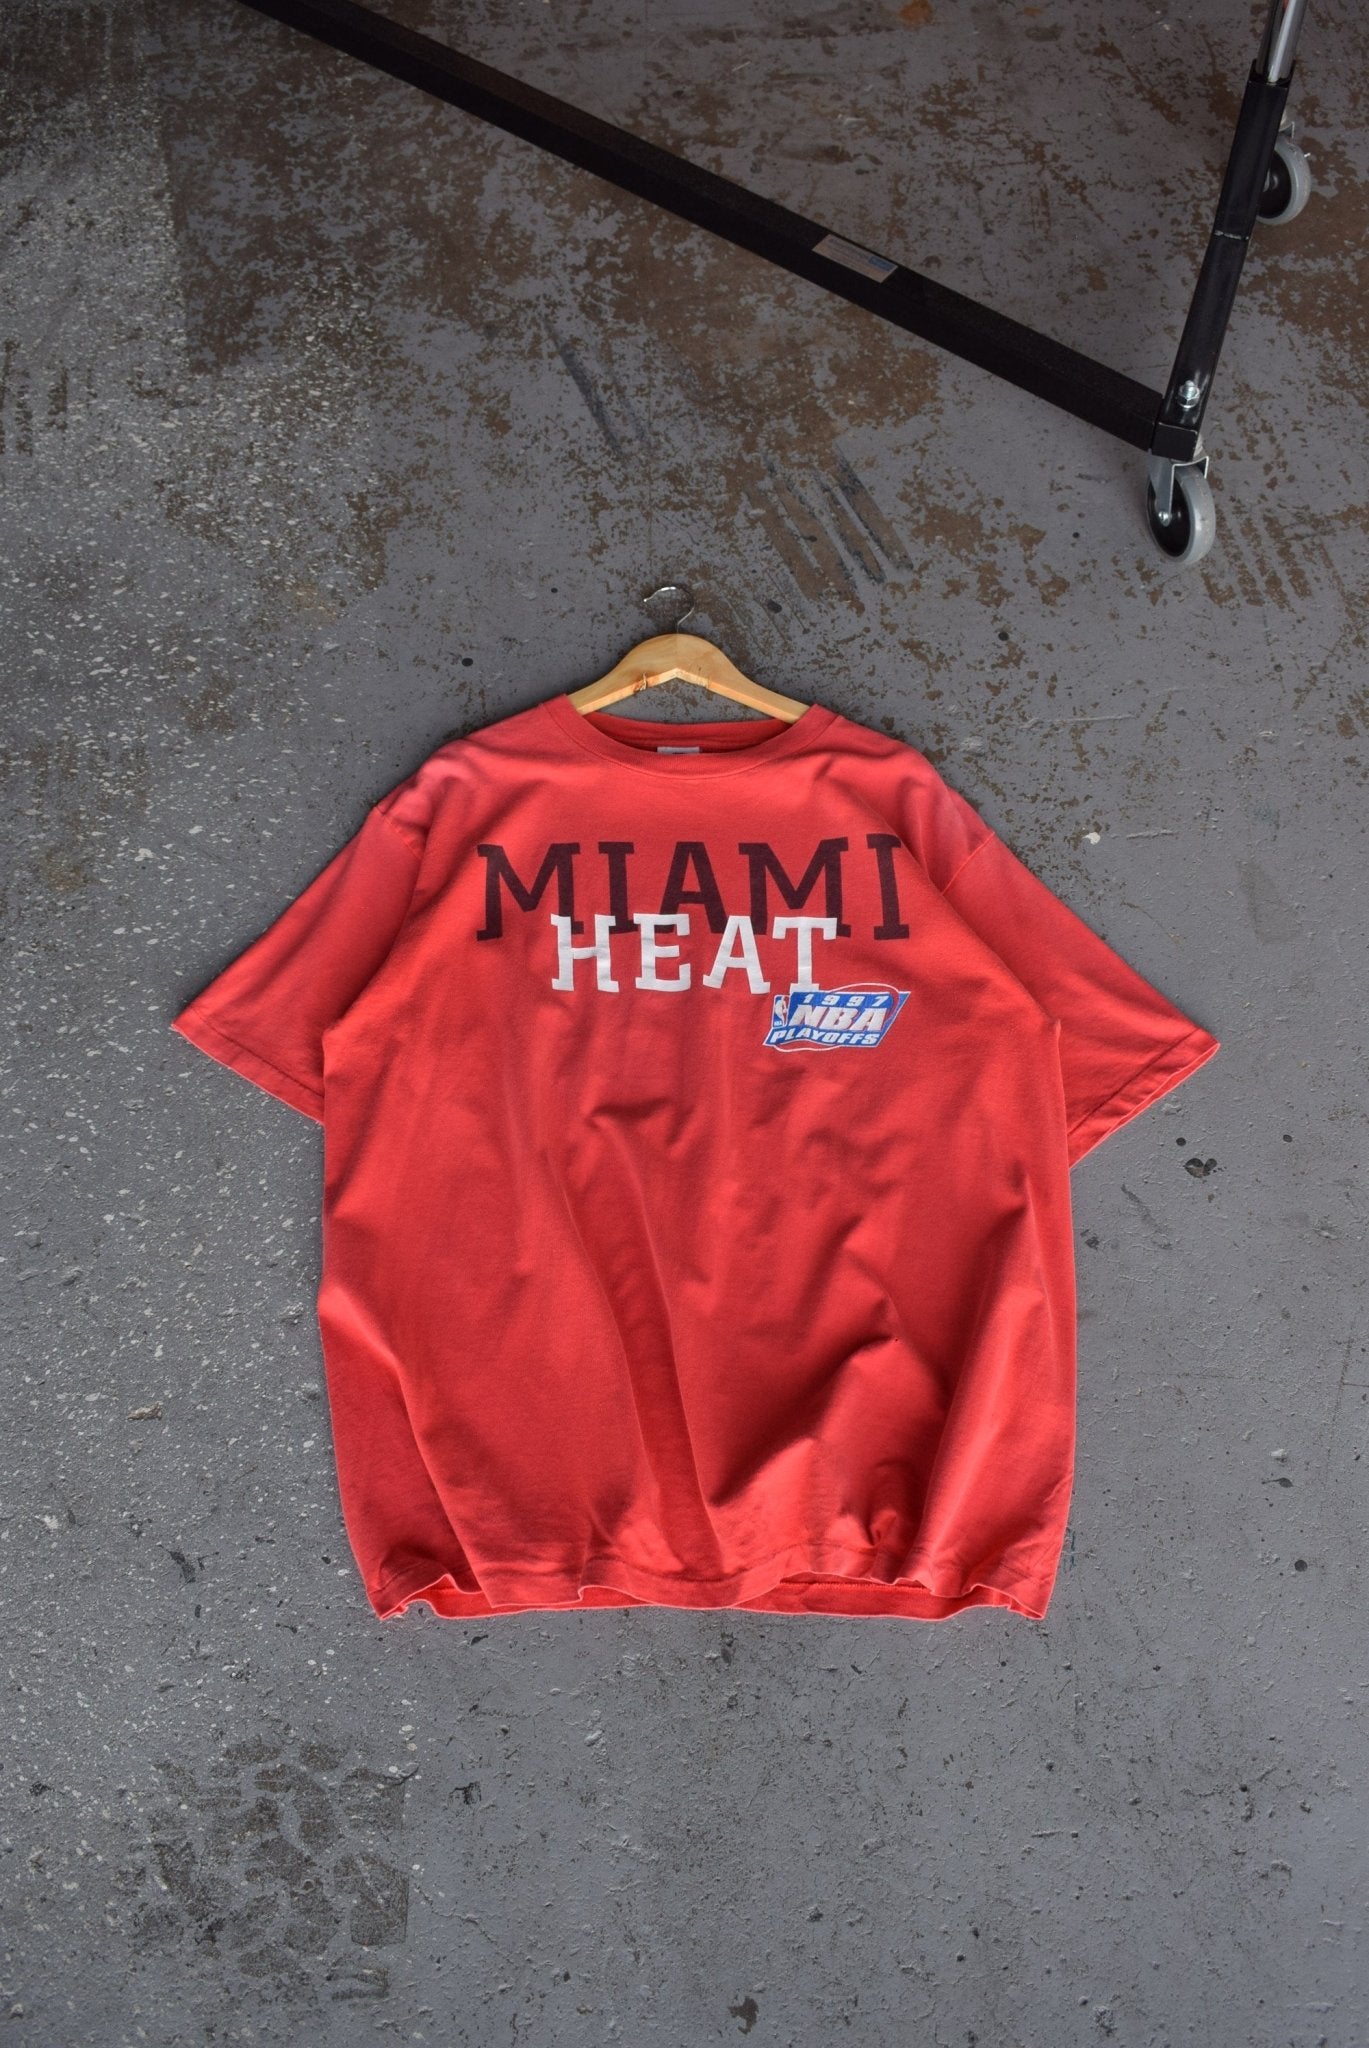 Vintage 1997 NBA Miami Heat Playoffs Tee (XL) - Retrospective Store